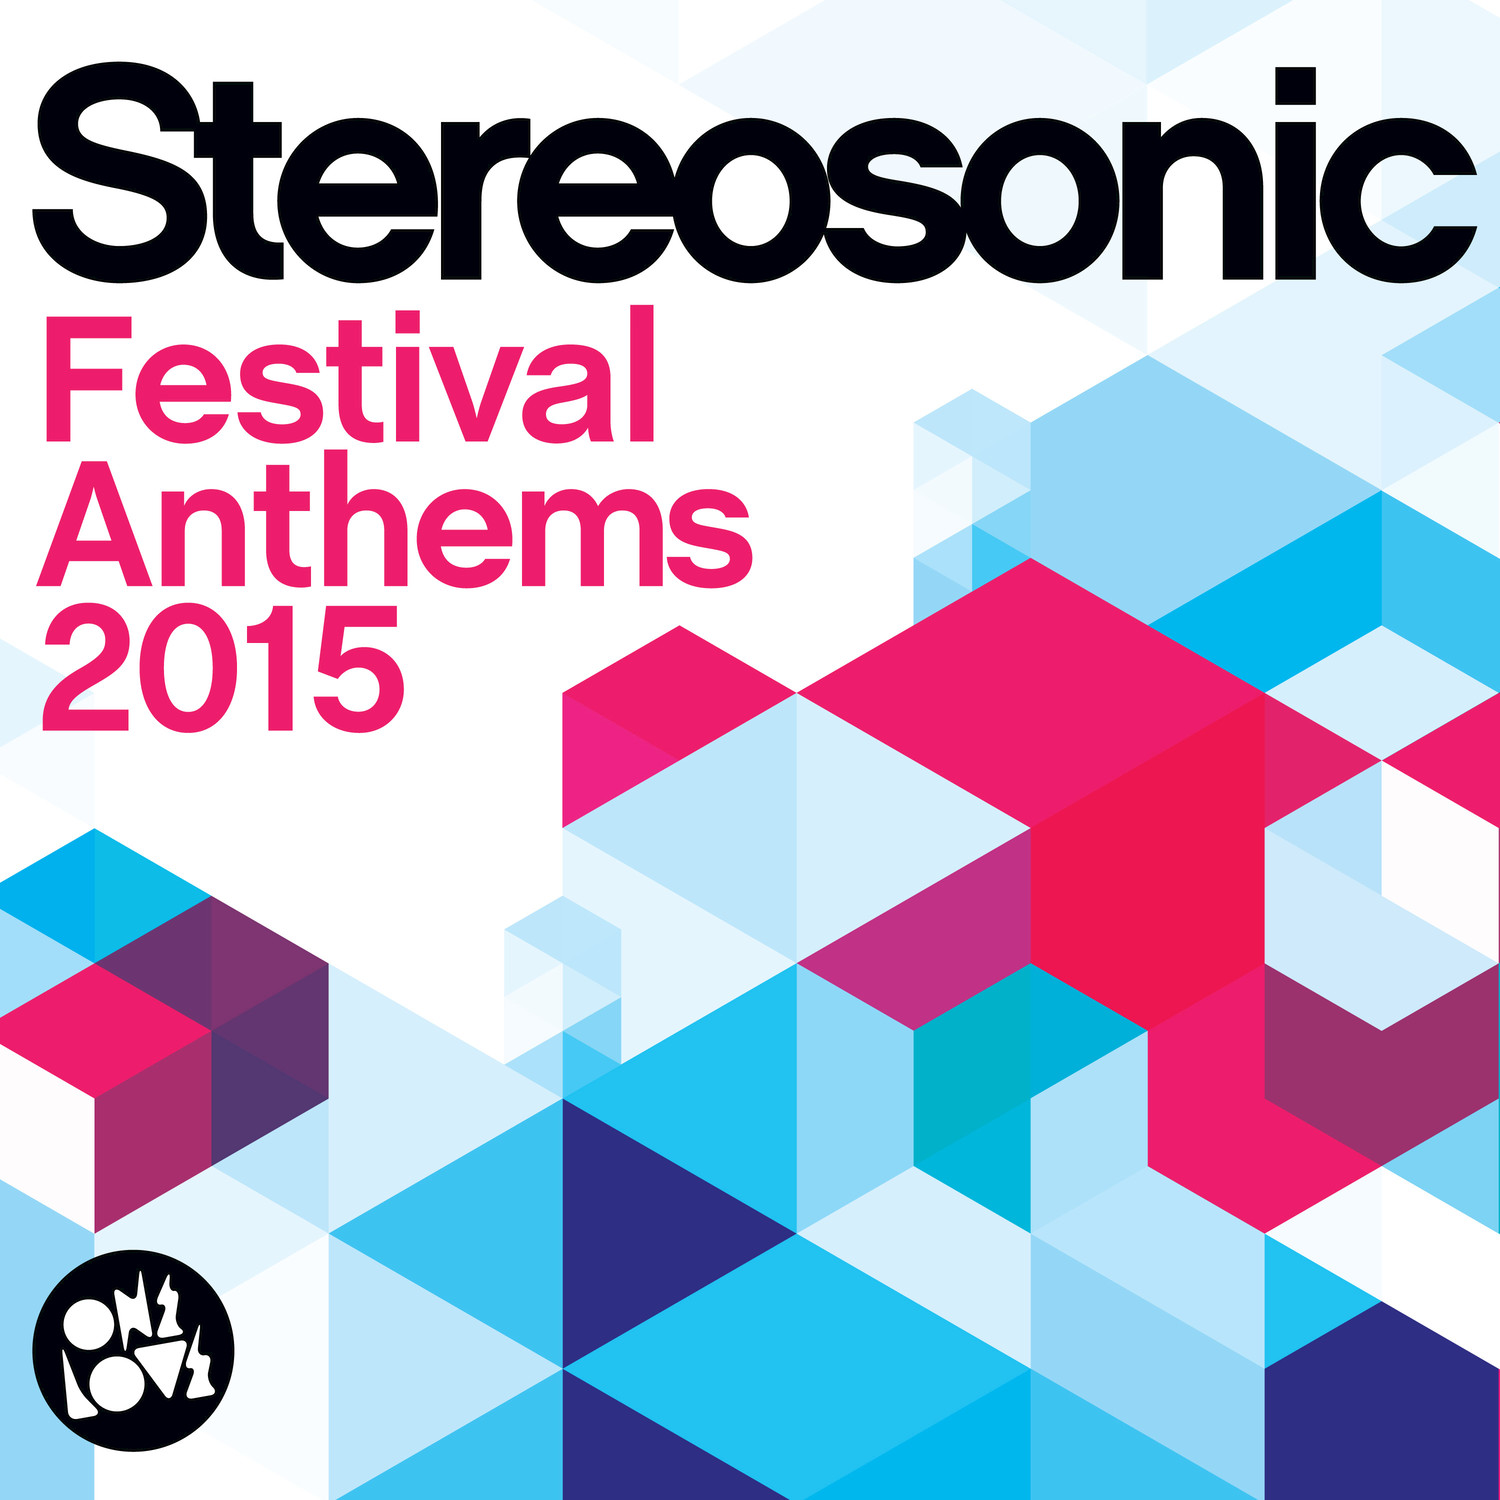 Stereosonic Festival Anthems 2015